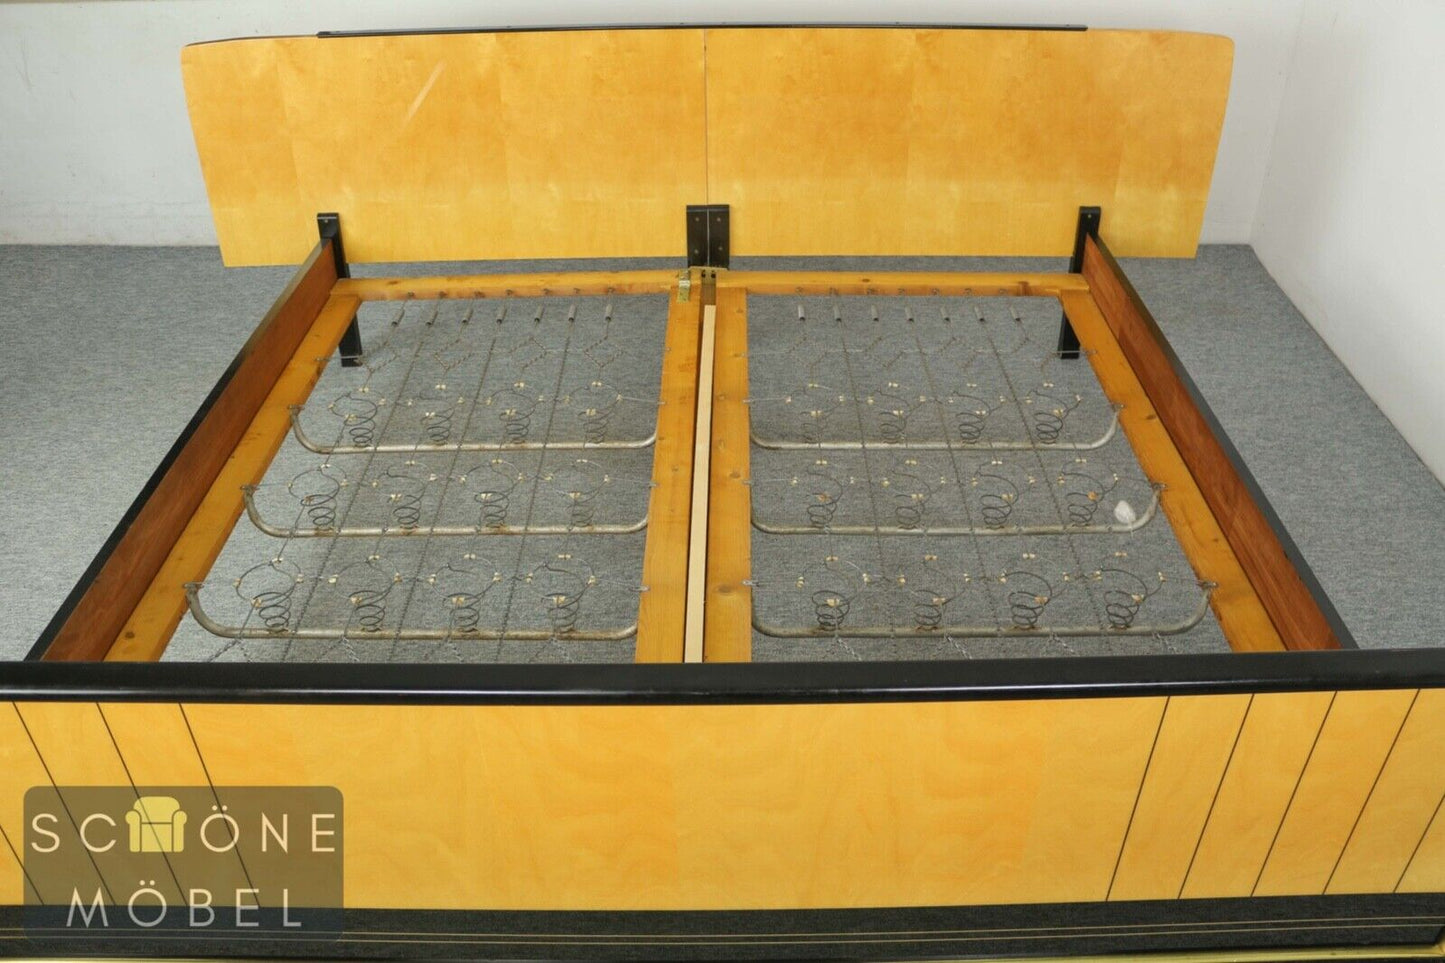 50er Retro Bett 200x200cm Vintage Doppelbett Gästebett Massivholz ohne Matratze